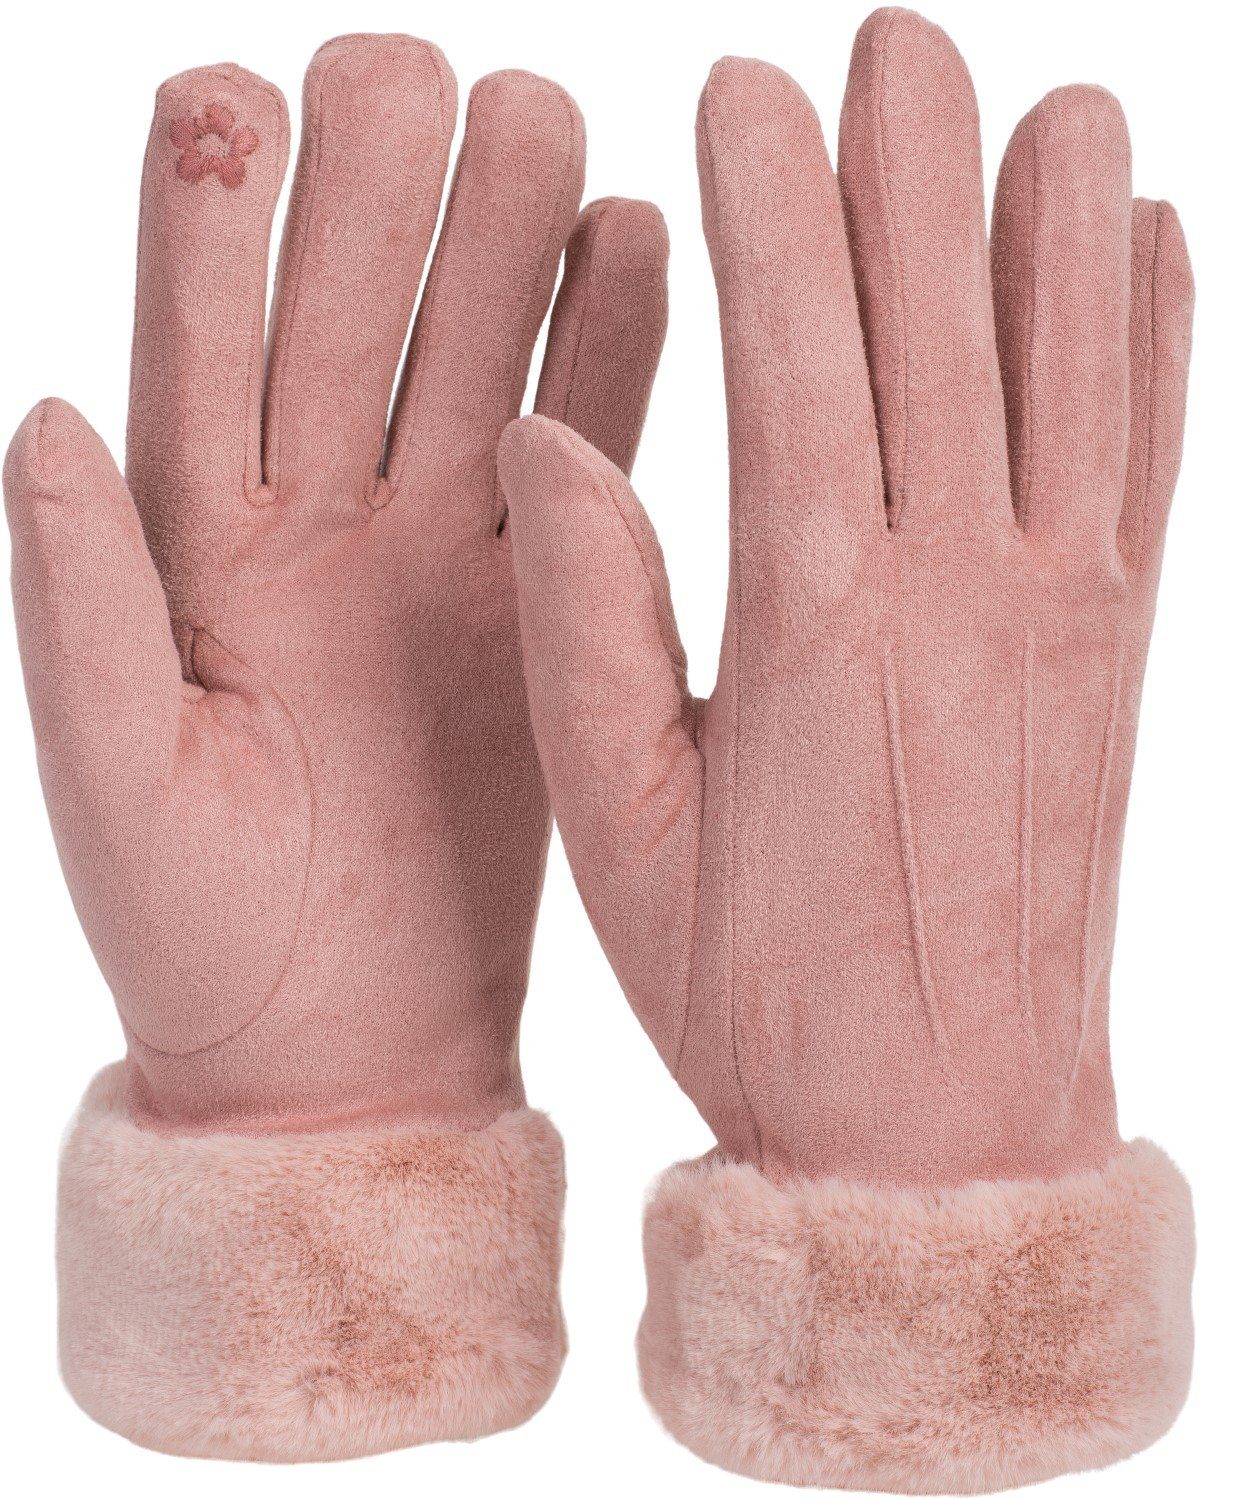 Dunkelblau Fleecehandschuhe Unifarbene Handschuhe styleBREAKER Kunstfell mit Touchscreen